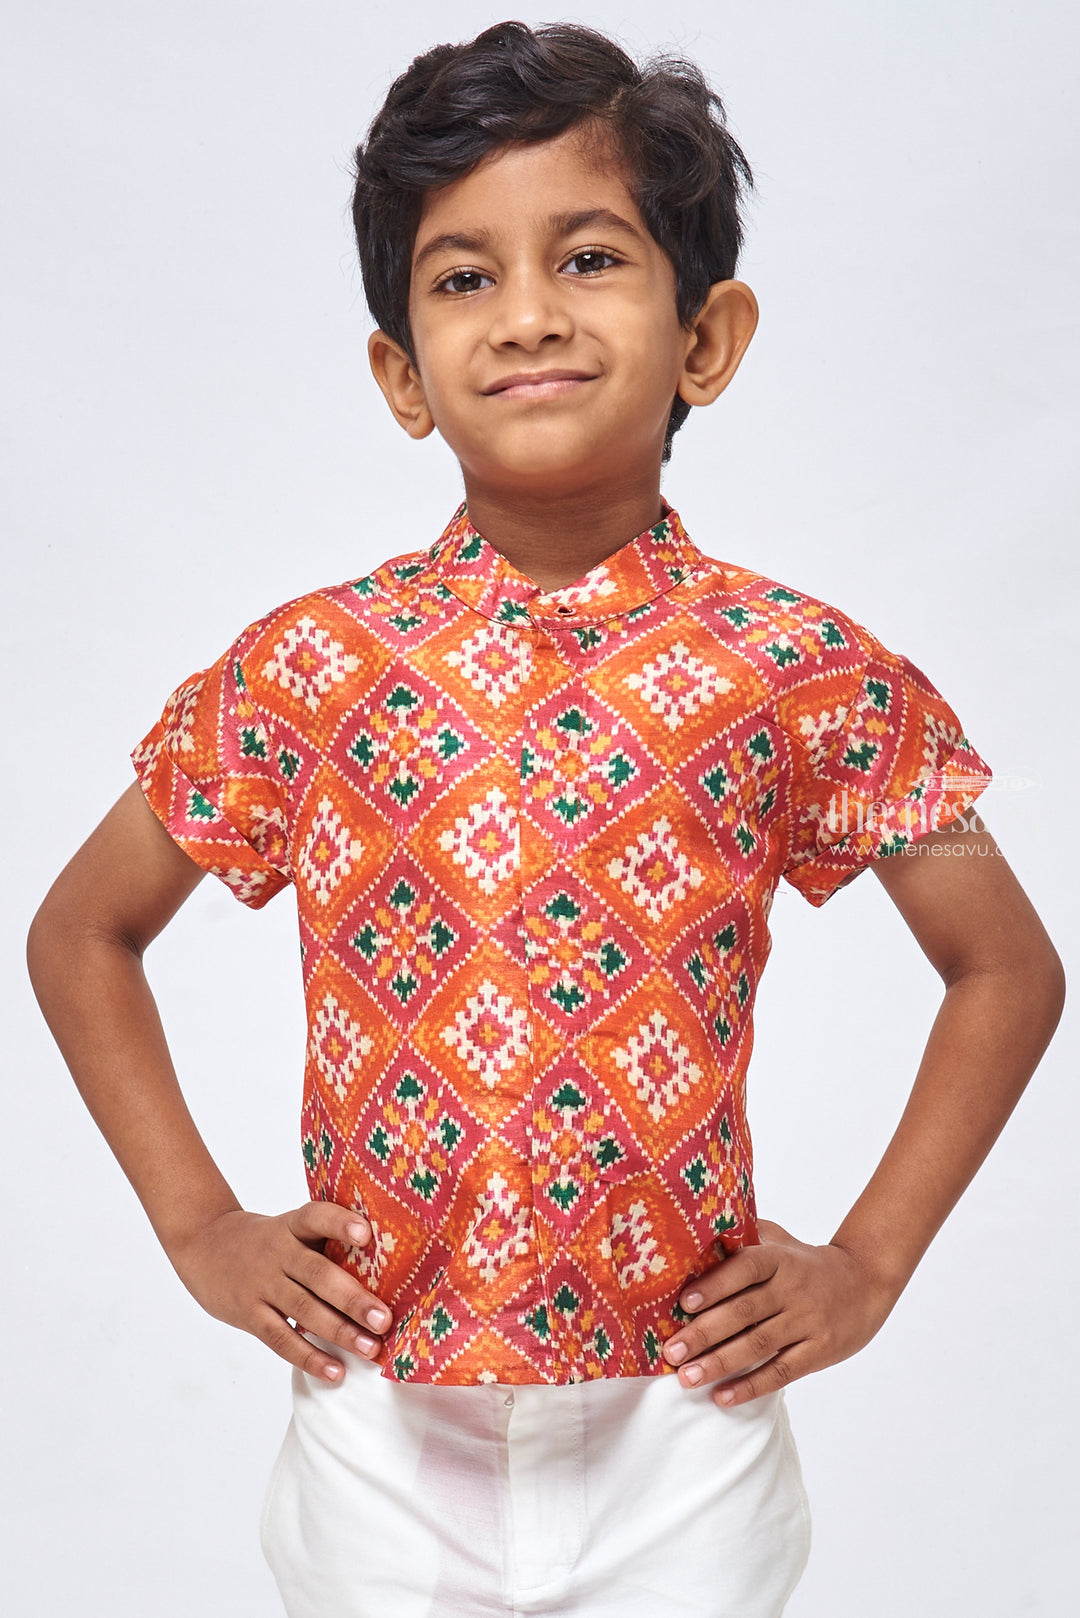 The Nesavu Boys Silk Shirt Regal Patola Silk Boys' Shirts: Luxurious Attire for Special Occasions Nesavu 14 (6M) / Orange / Silk Blend BS048A-14 Boys Patola Printed Shirts Online | Boy Baby shirts | The Nesavu